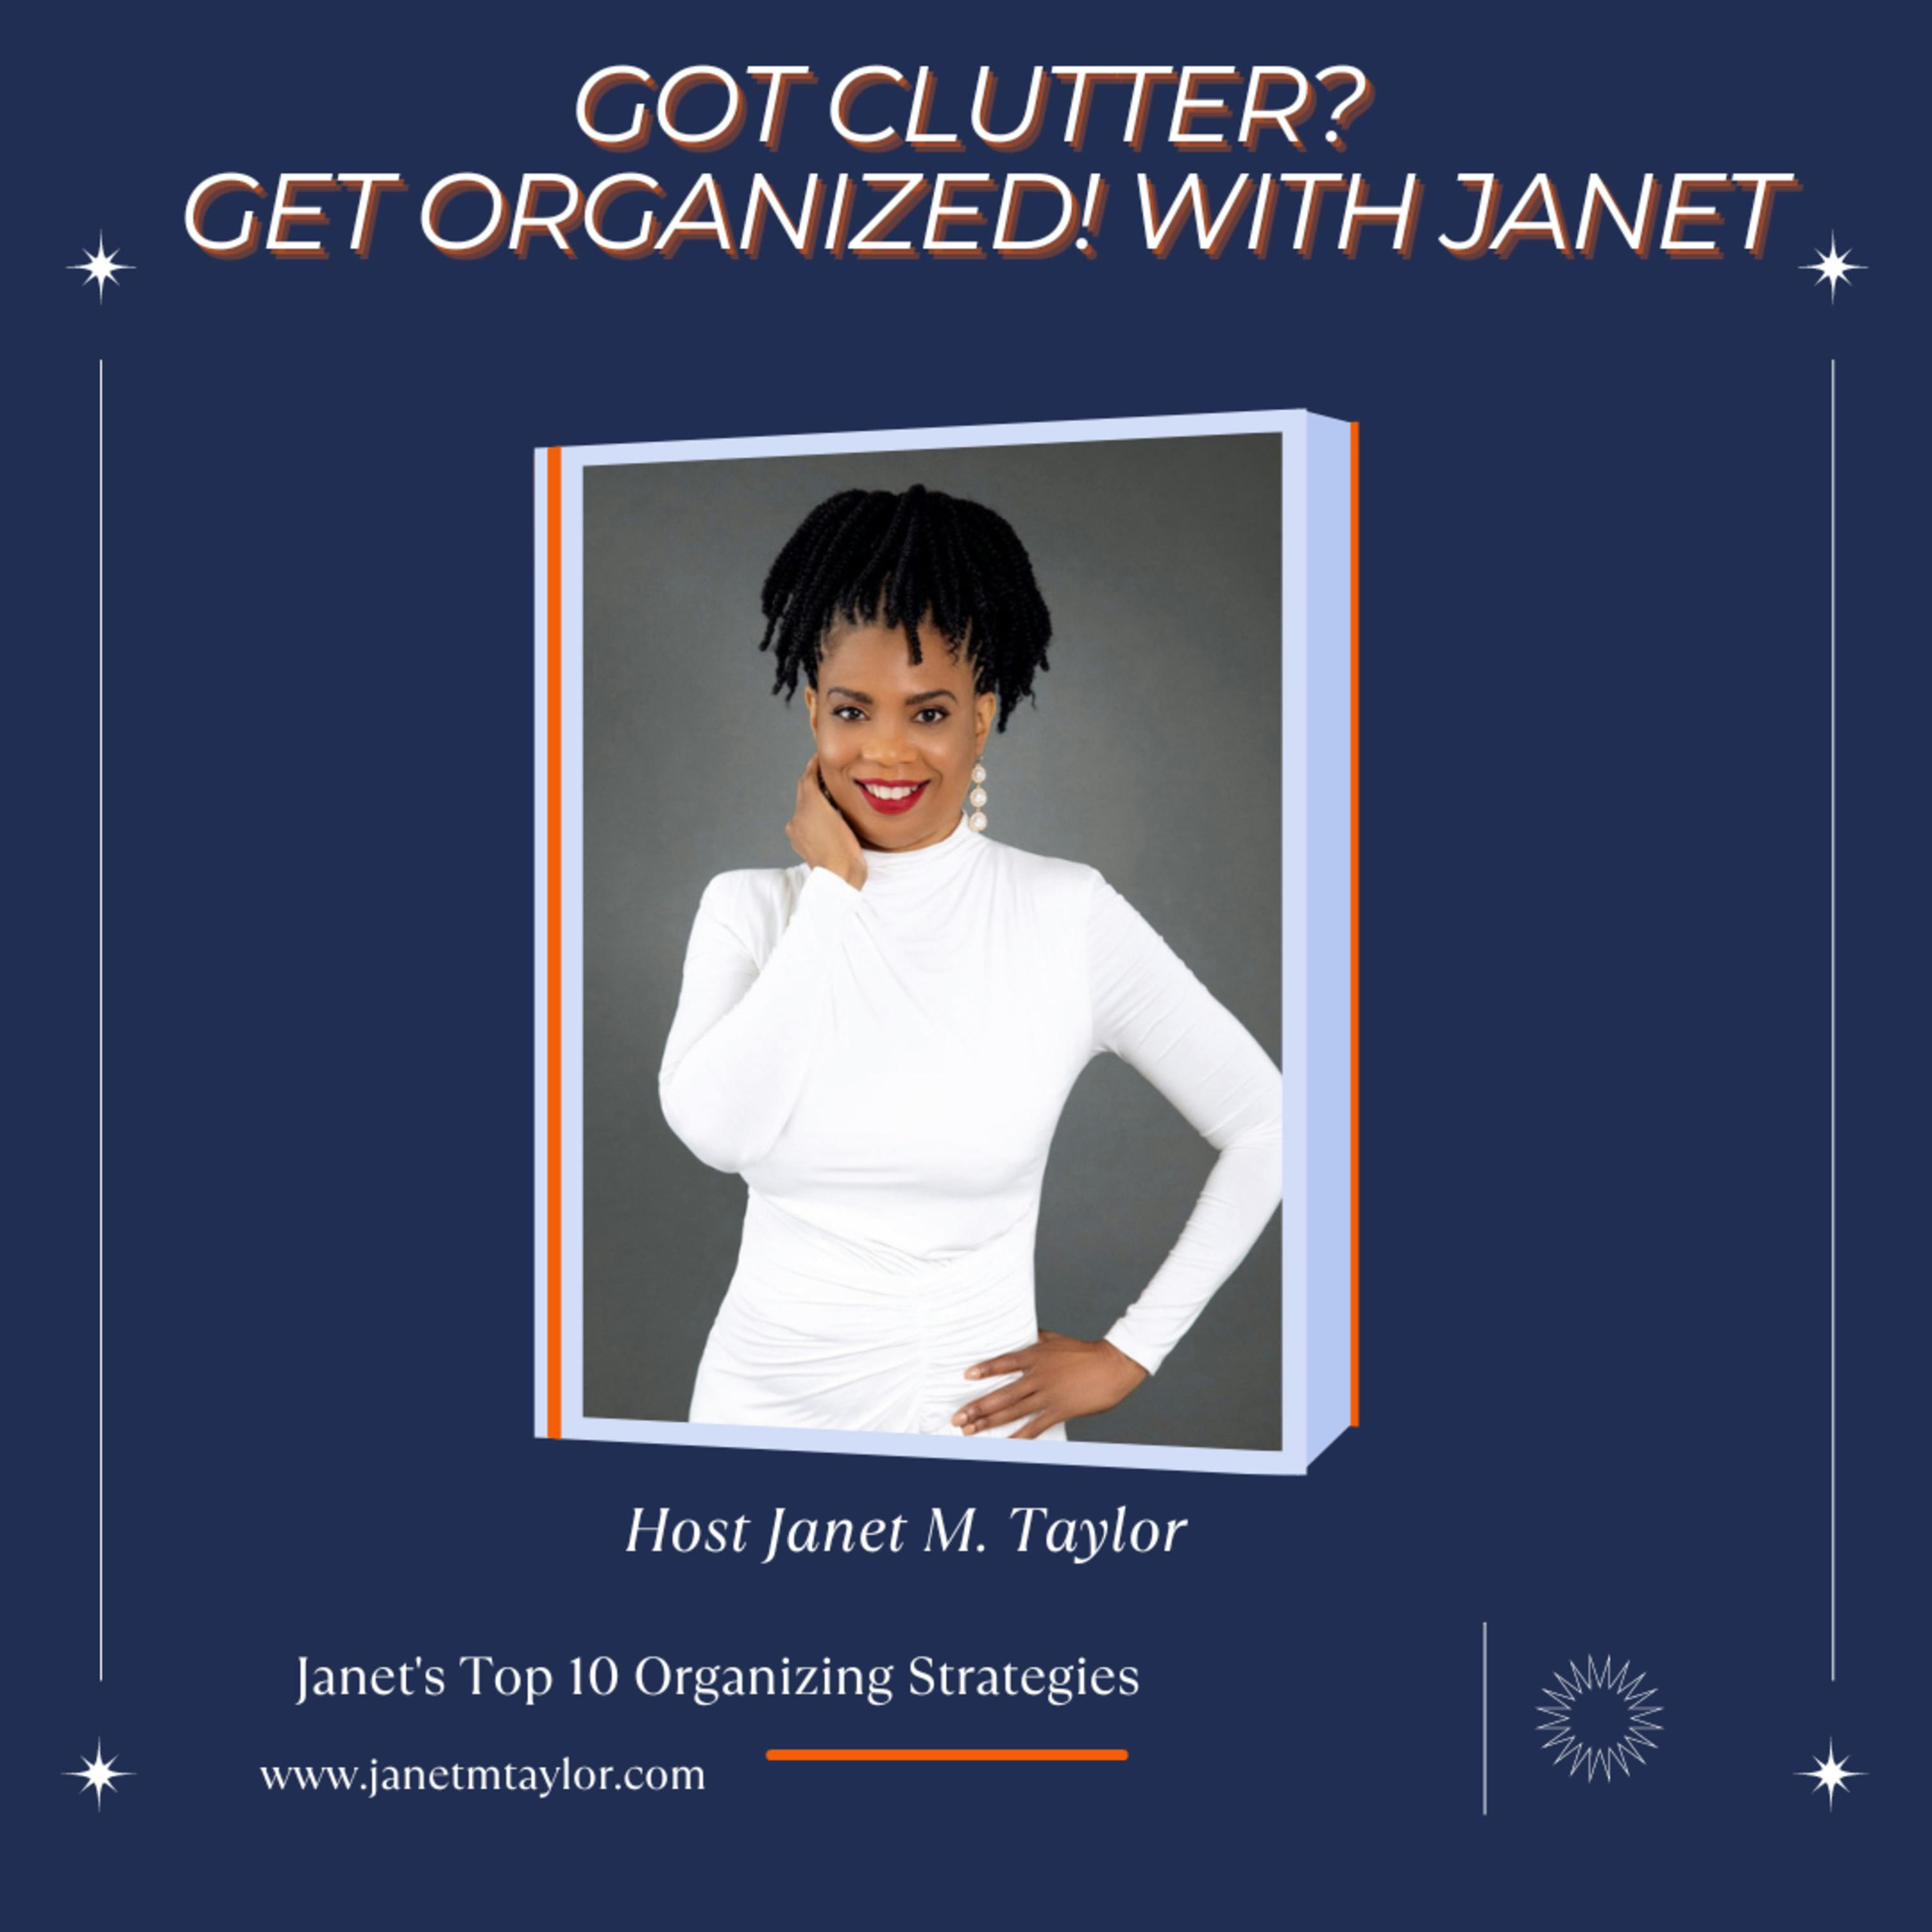 Janet’s Top Ten Organizing Strategies